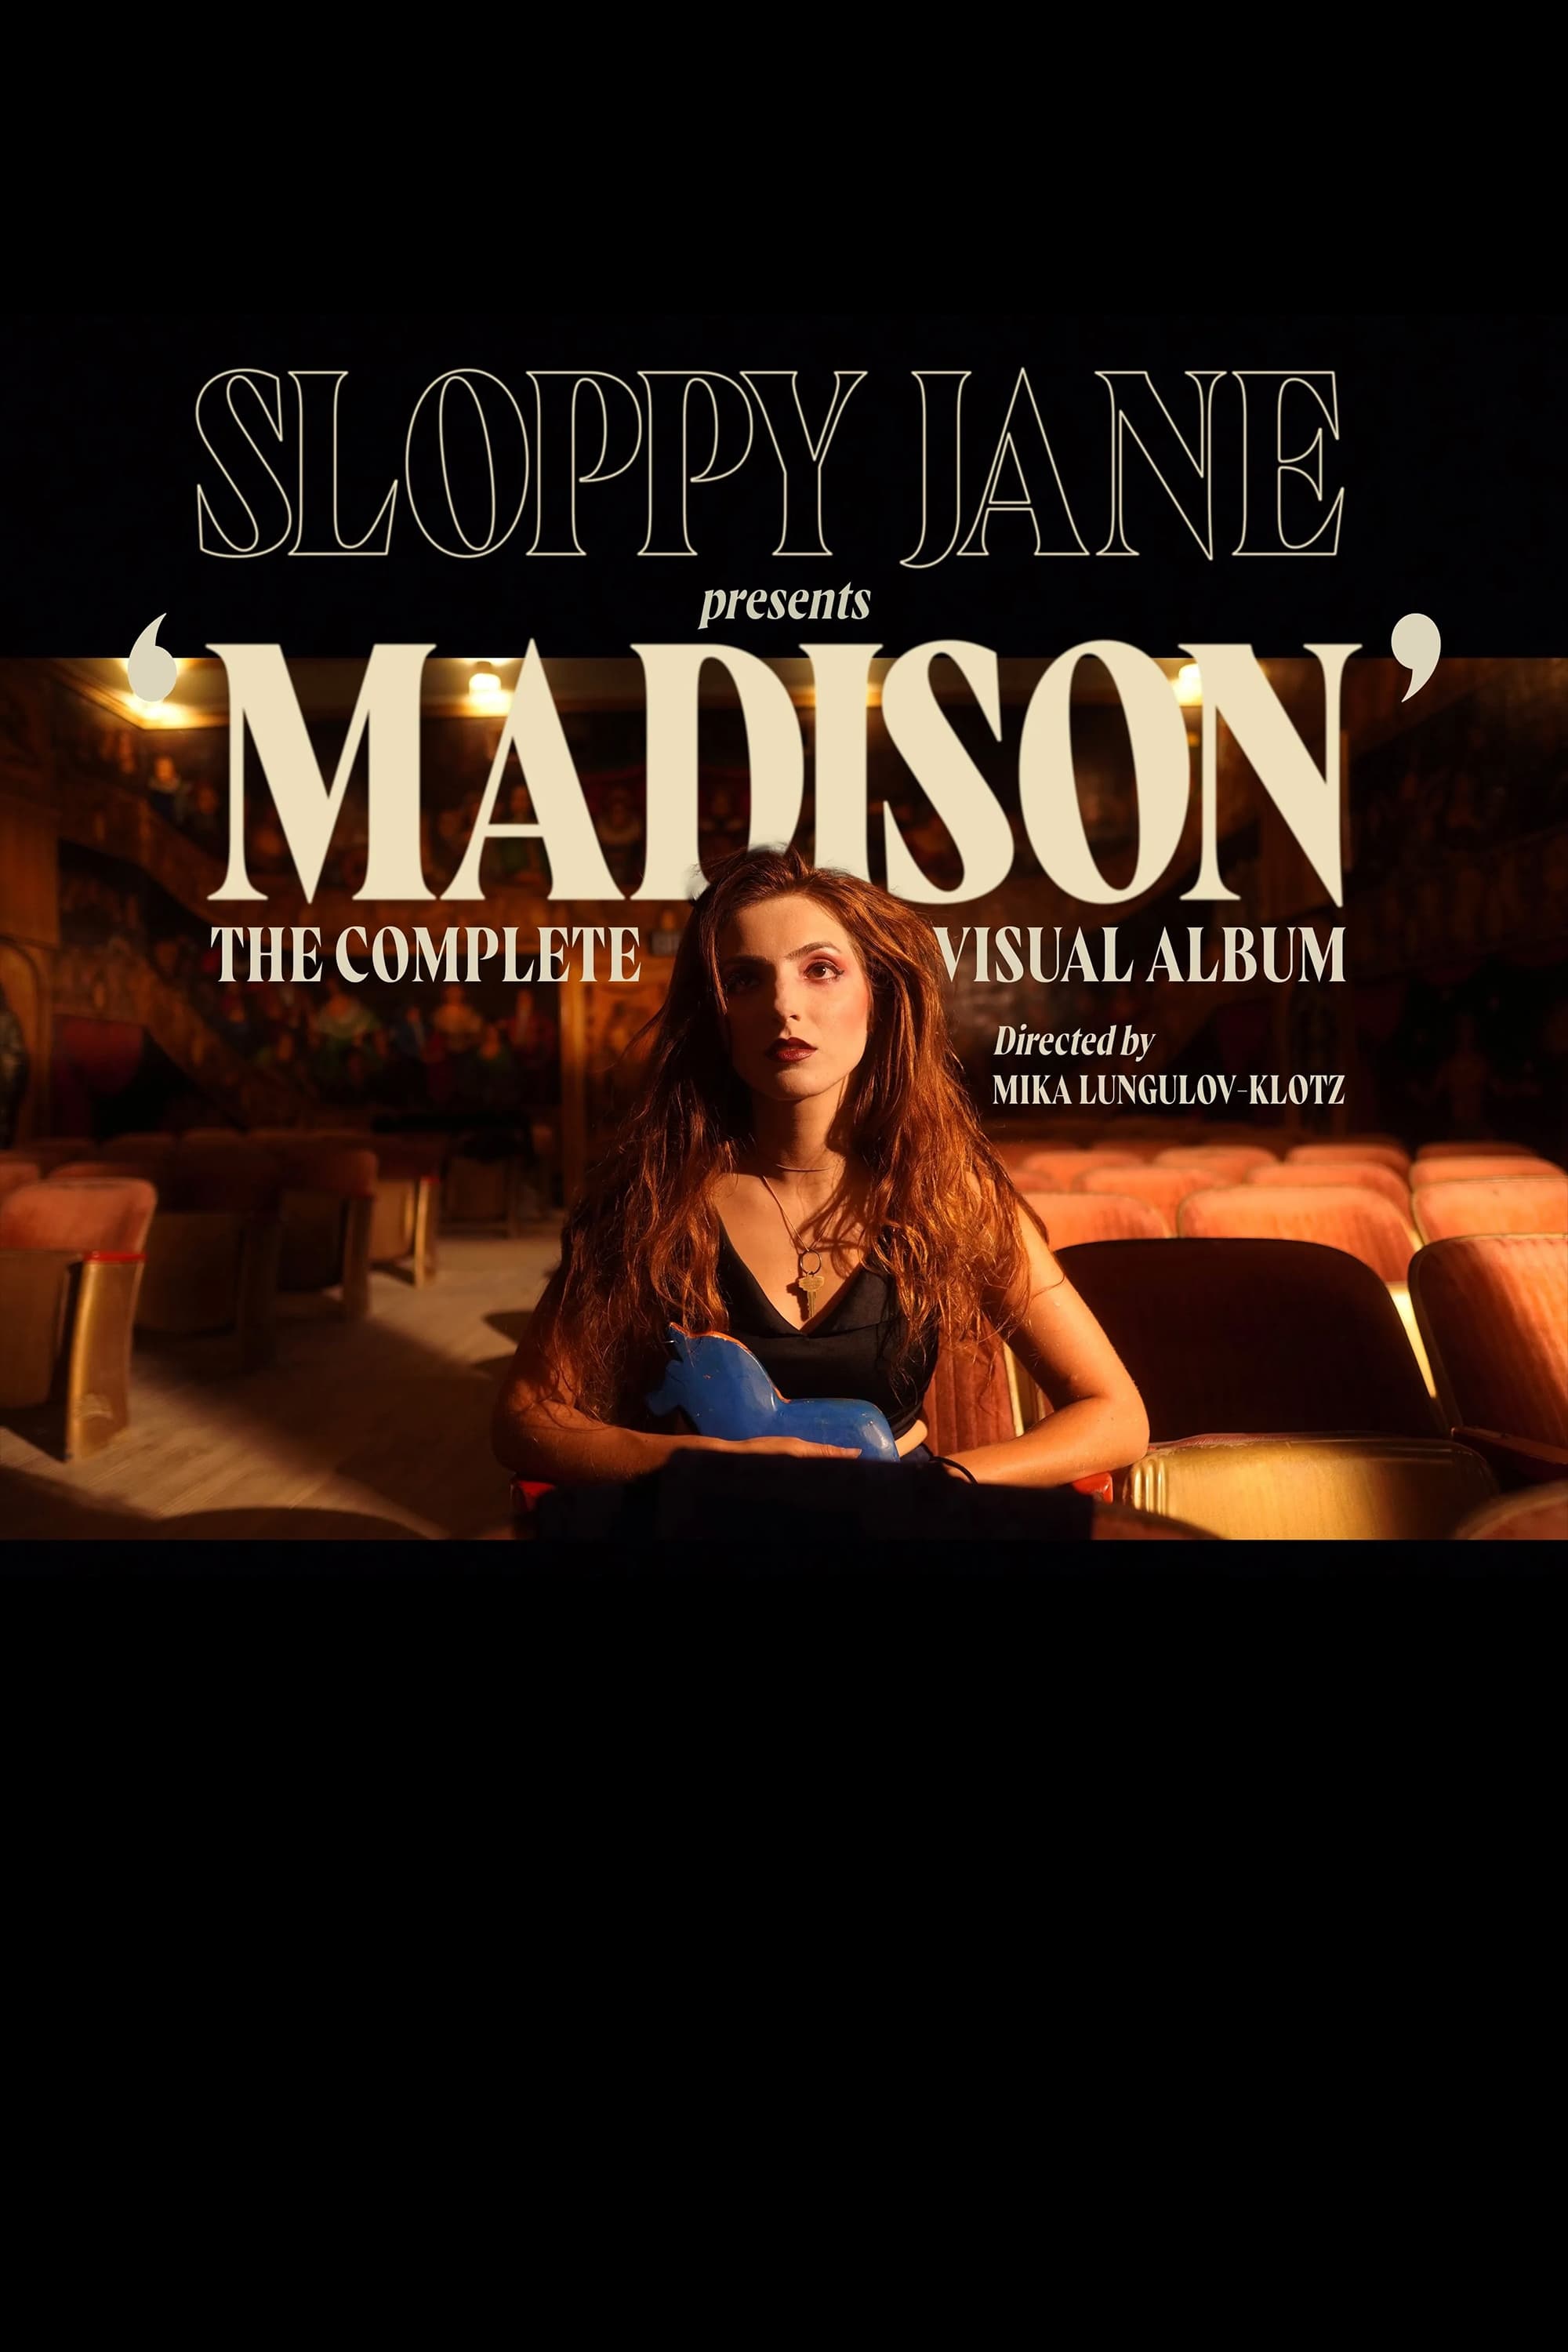 Madison: The Complete Visual Album